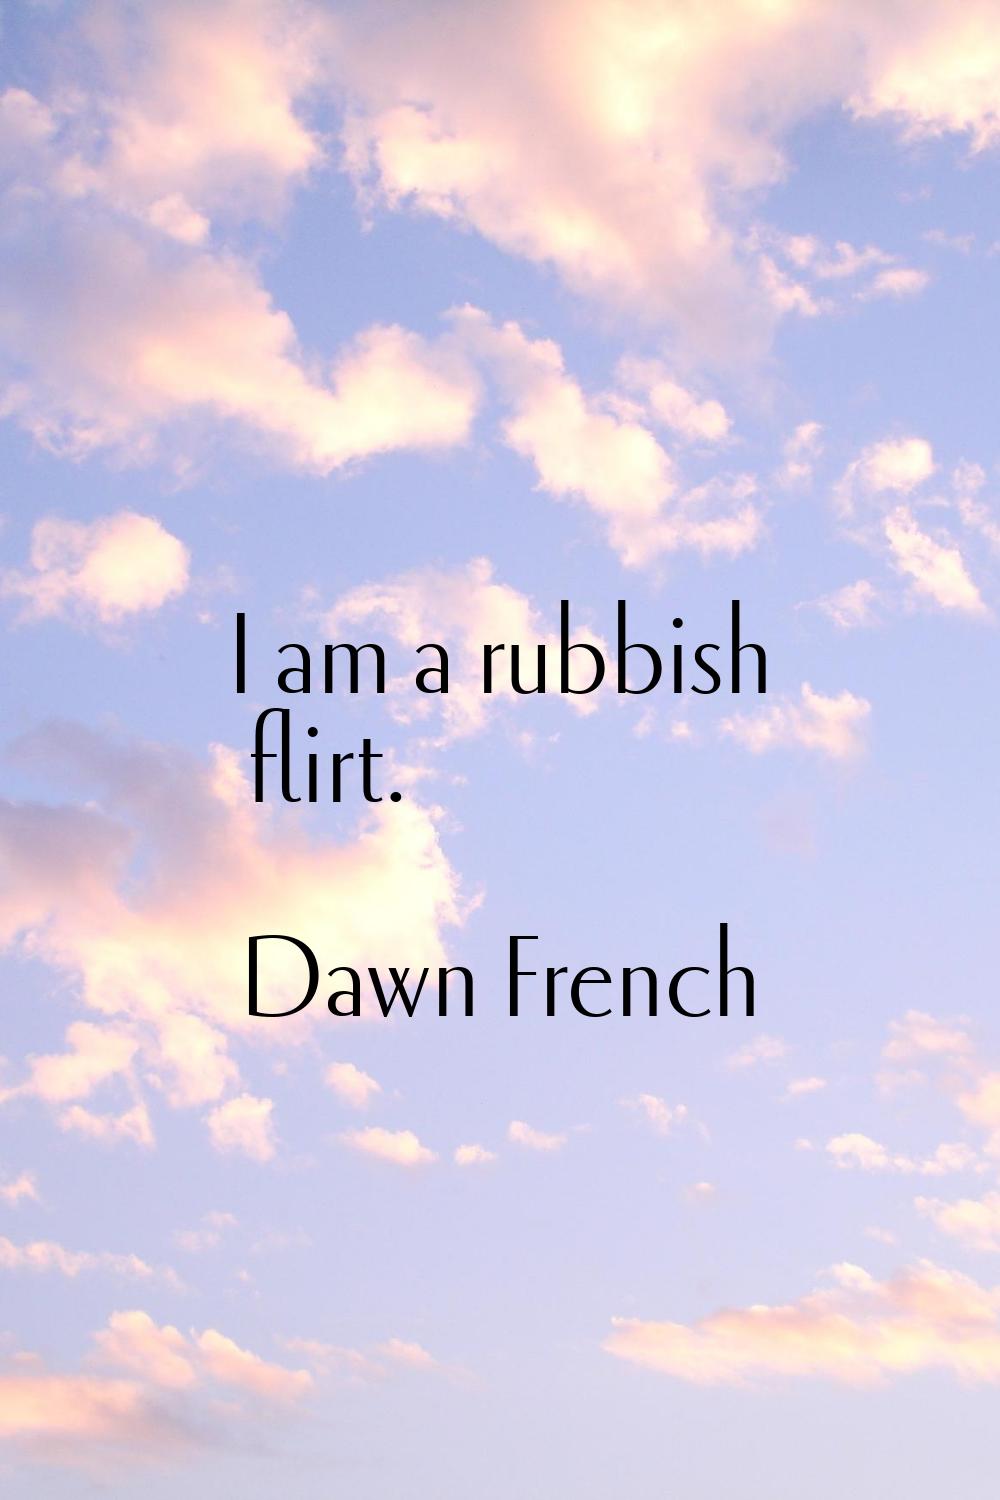 I am a rubbish flirt.